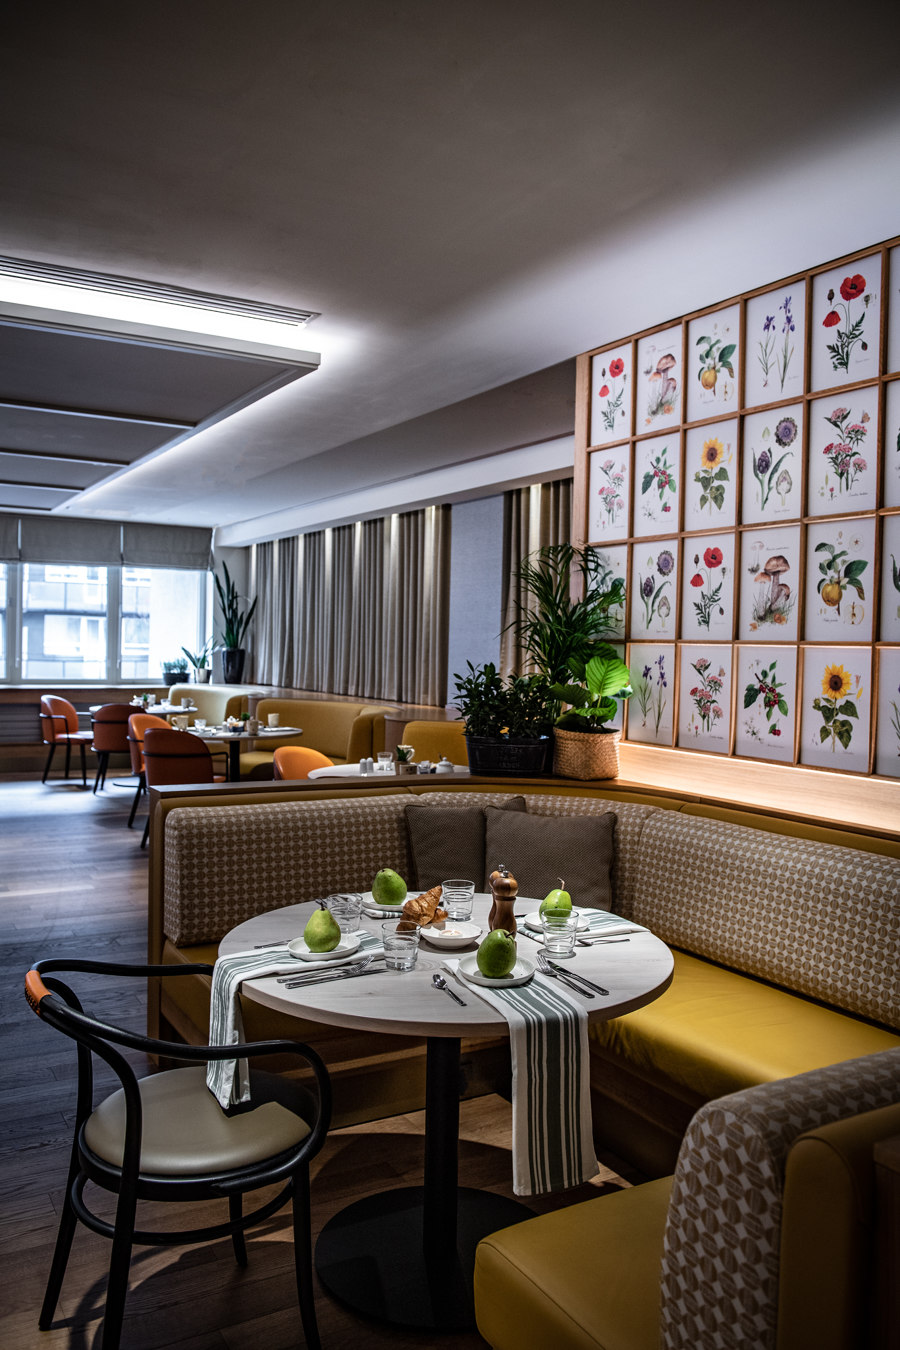 Sheraton Grand Warsaw by Epicurean | Restaurant interiors